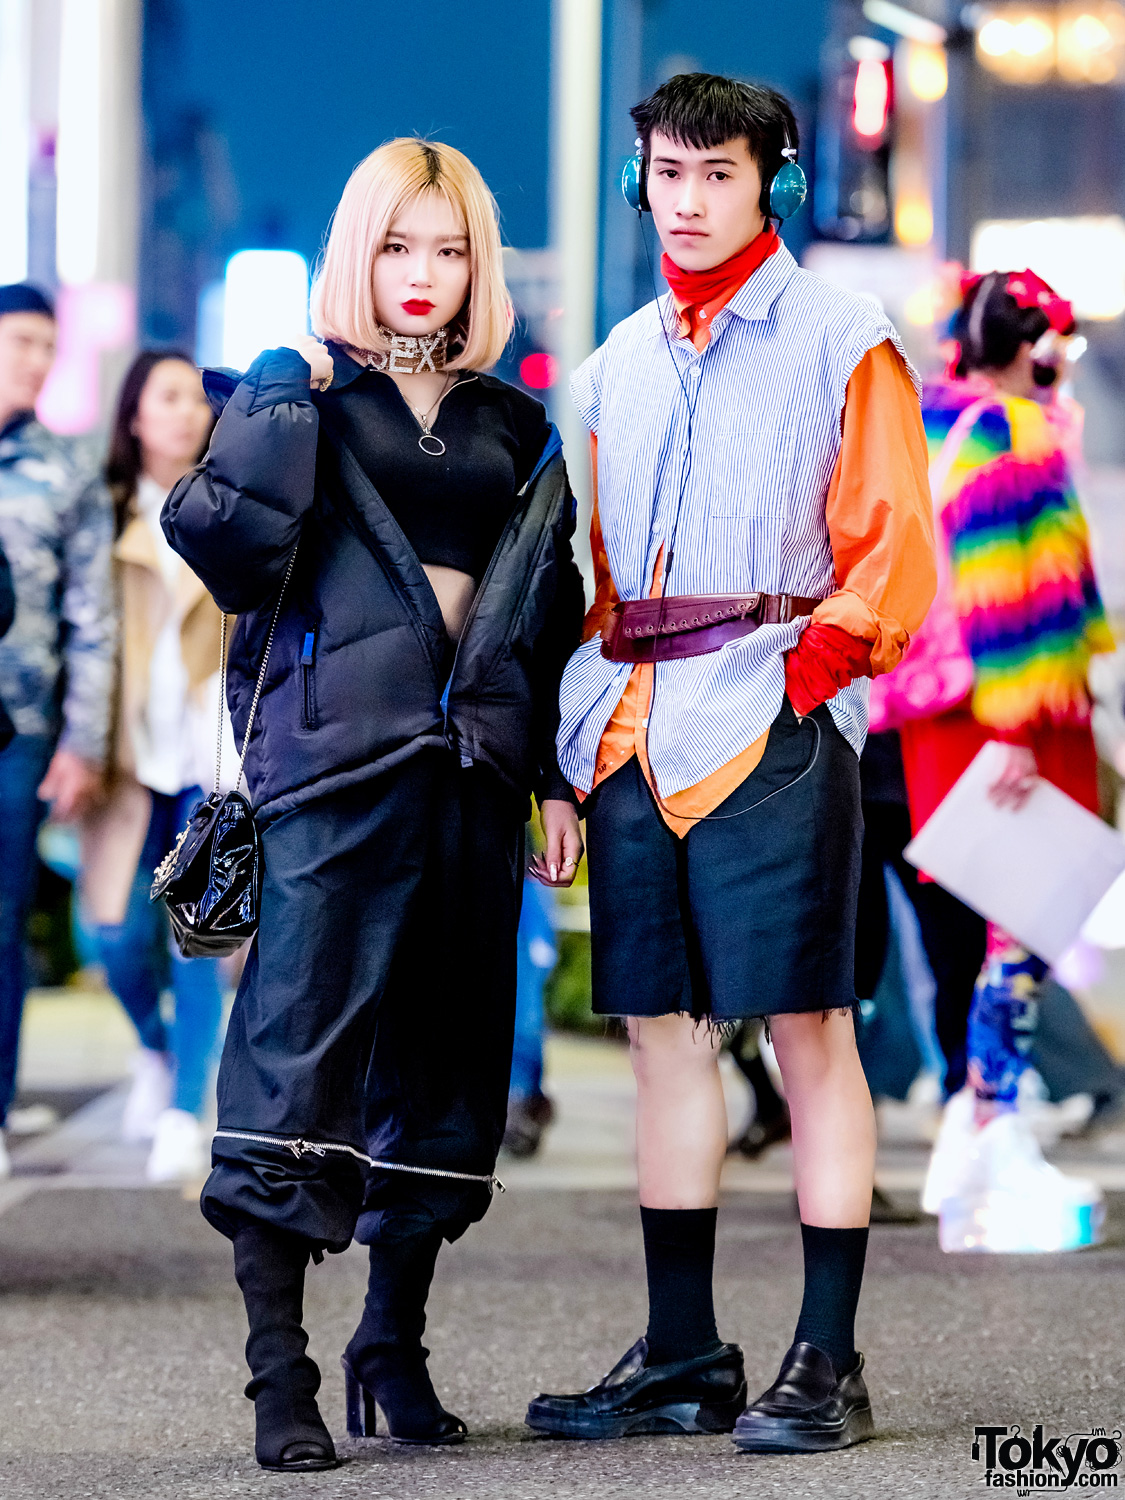 Harajuku Vintage Street Styles w/ All-Black Outfit, Orange Turtleneck, Black Shorts, Peep-Toe Boots, & Black Leather Shoes